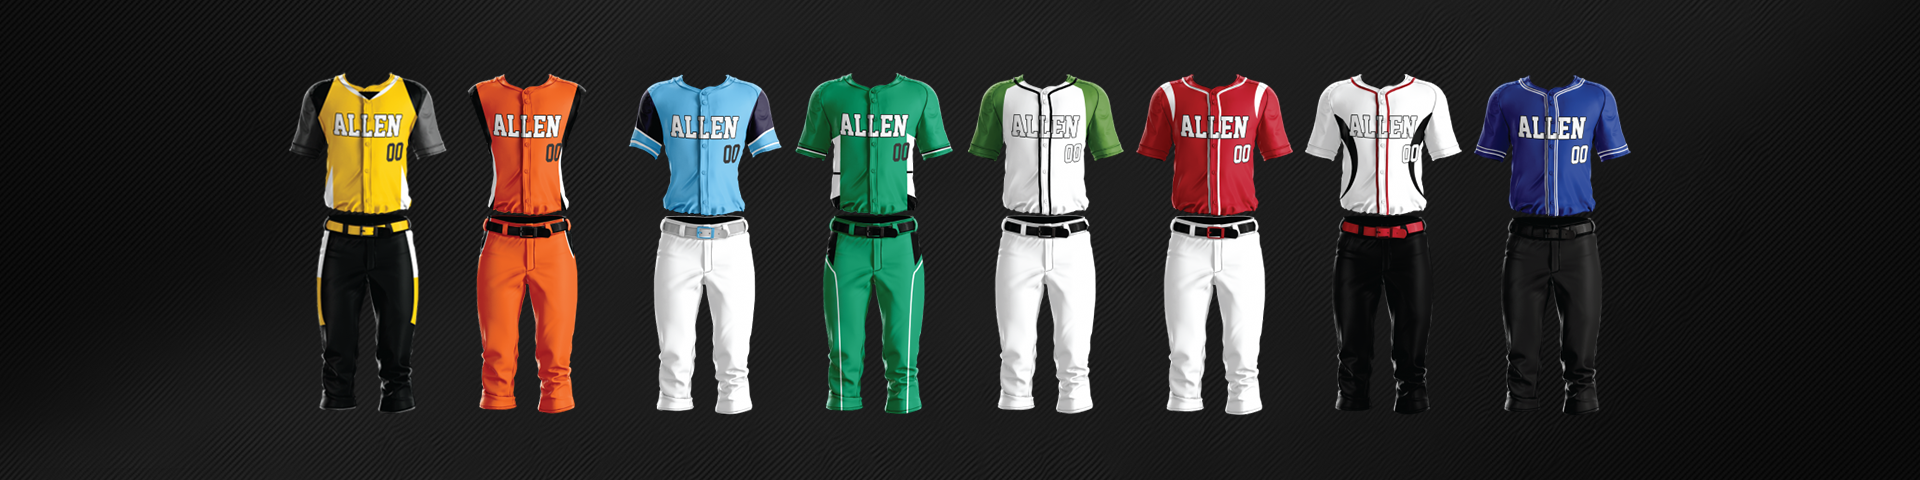 make baseball jerseys online